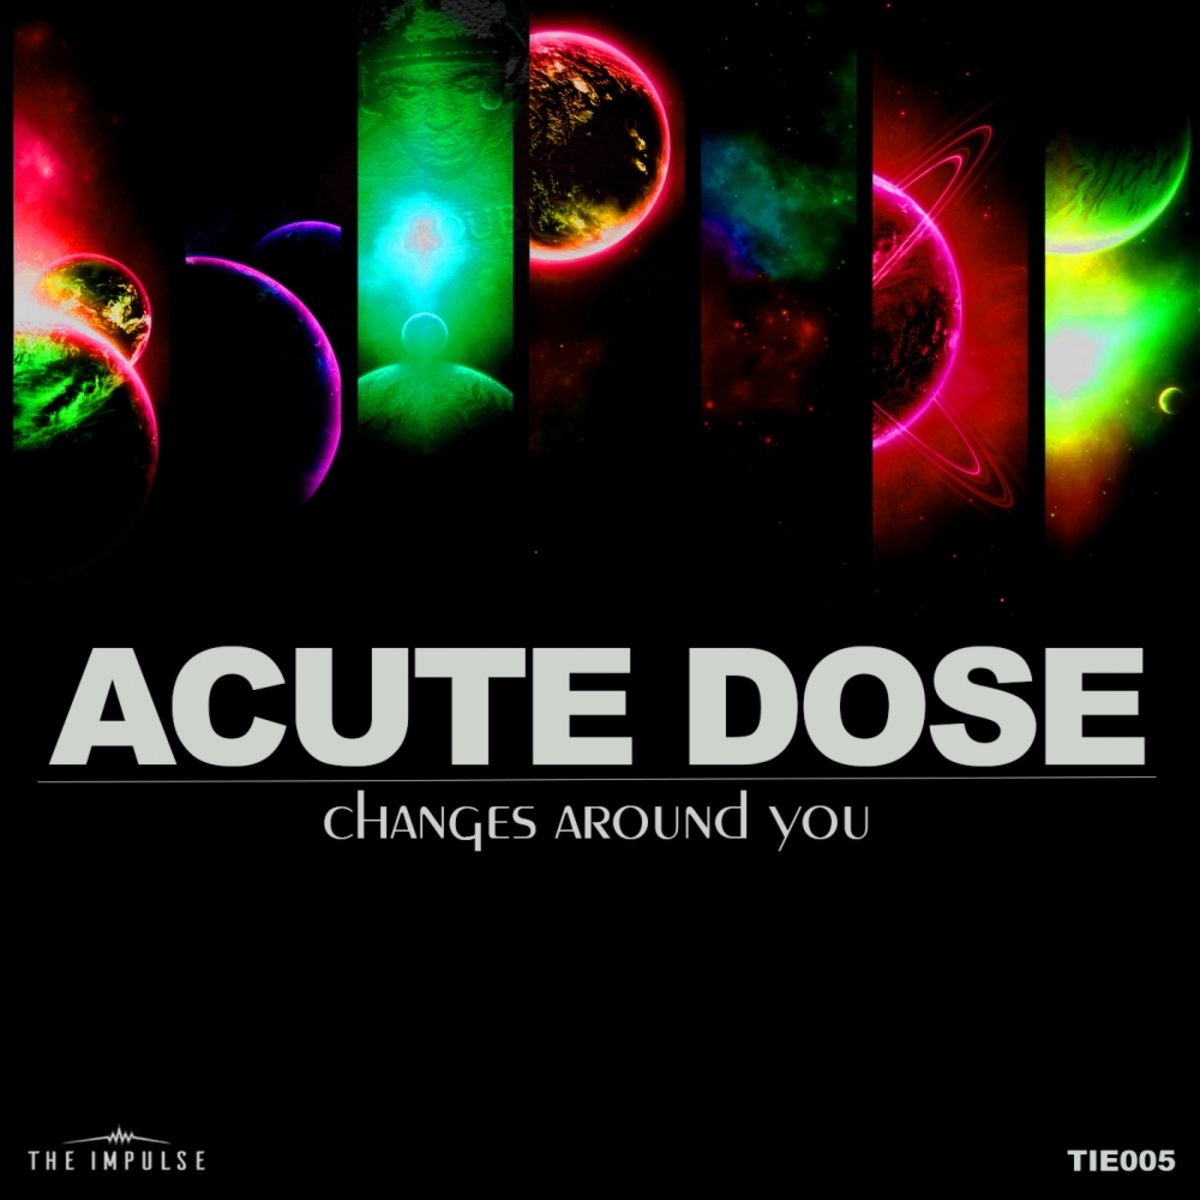 Acutedose - Changes Around You / The Impulse